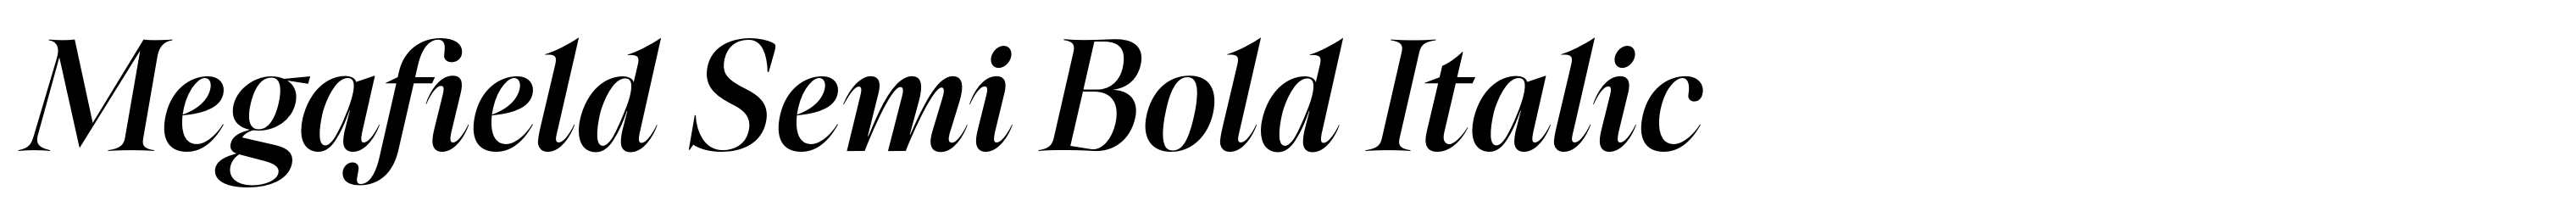 Megafield Semi Bold Italic